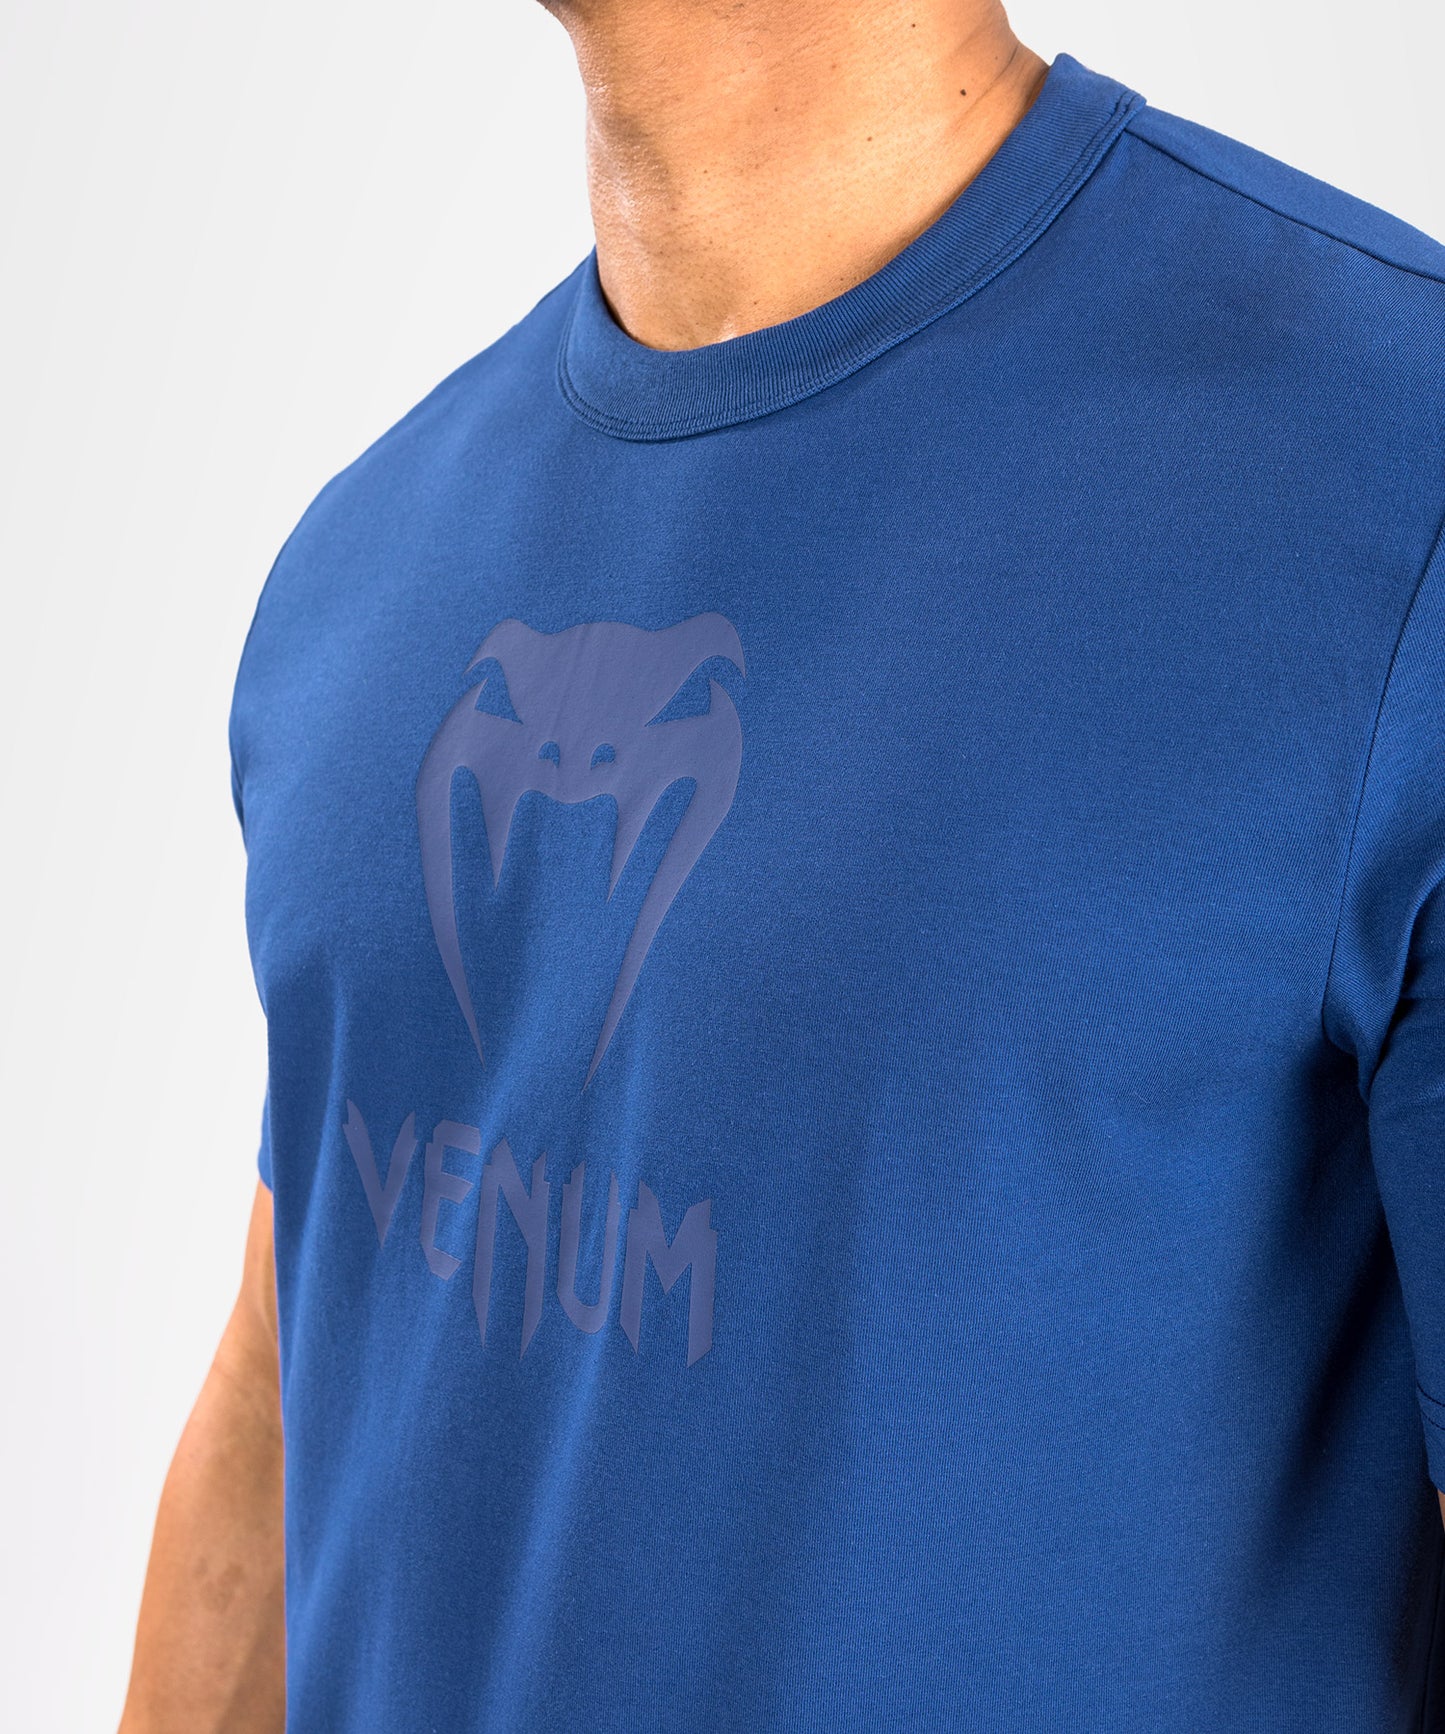 Venum Classic T-Shirt - Navy Blue/Navy Blue